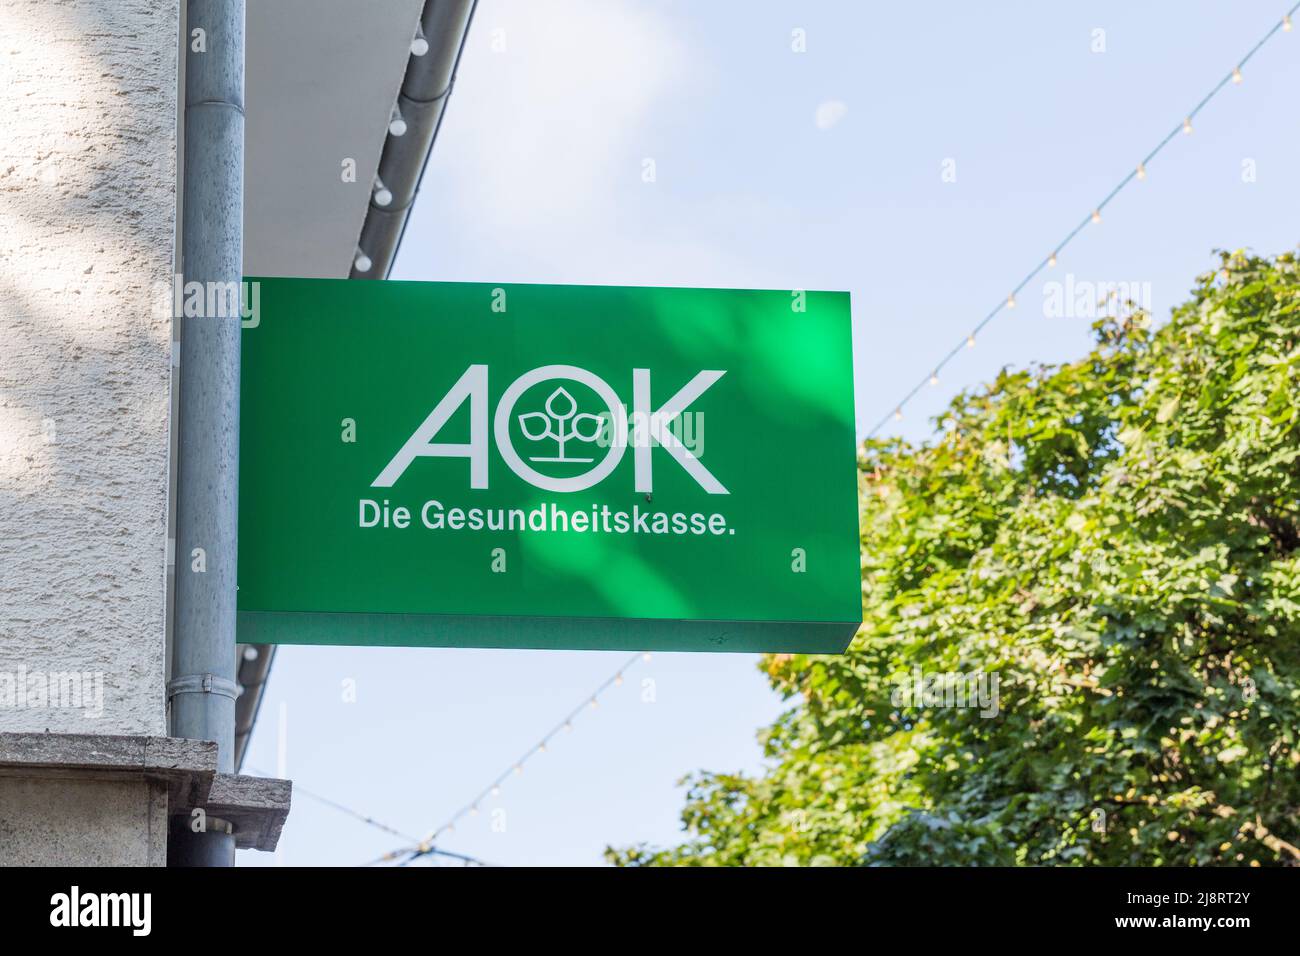 Stuttgart, Allemagne - 29 juillet 2021 : panneau AOK - Die Gesundheitskasse. La plus grande assurance maladie publique d'Allemagne. Banque D'Images